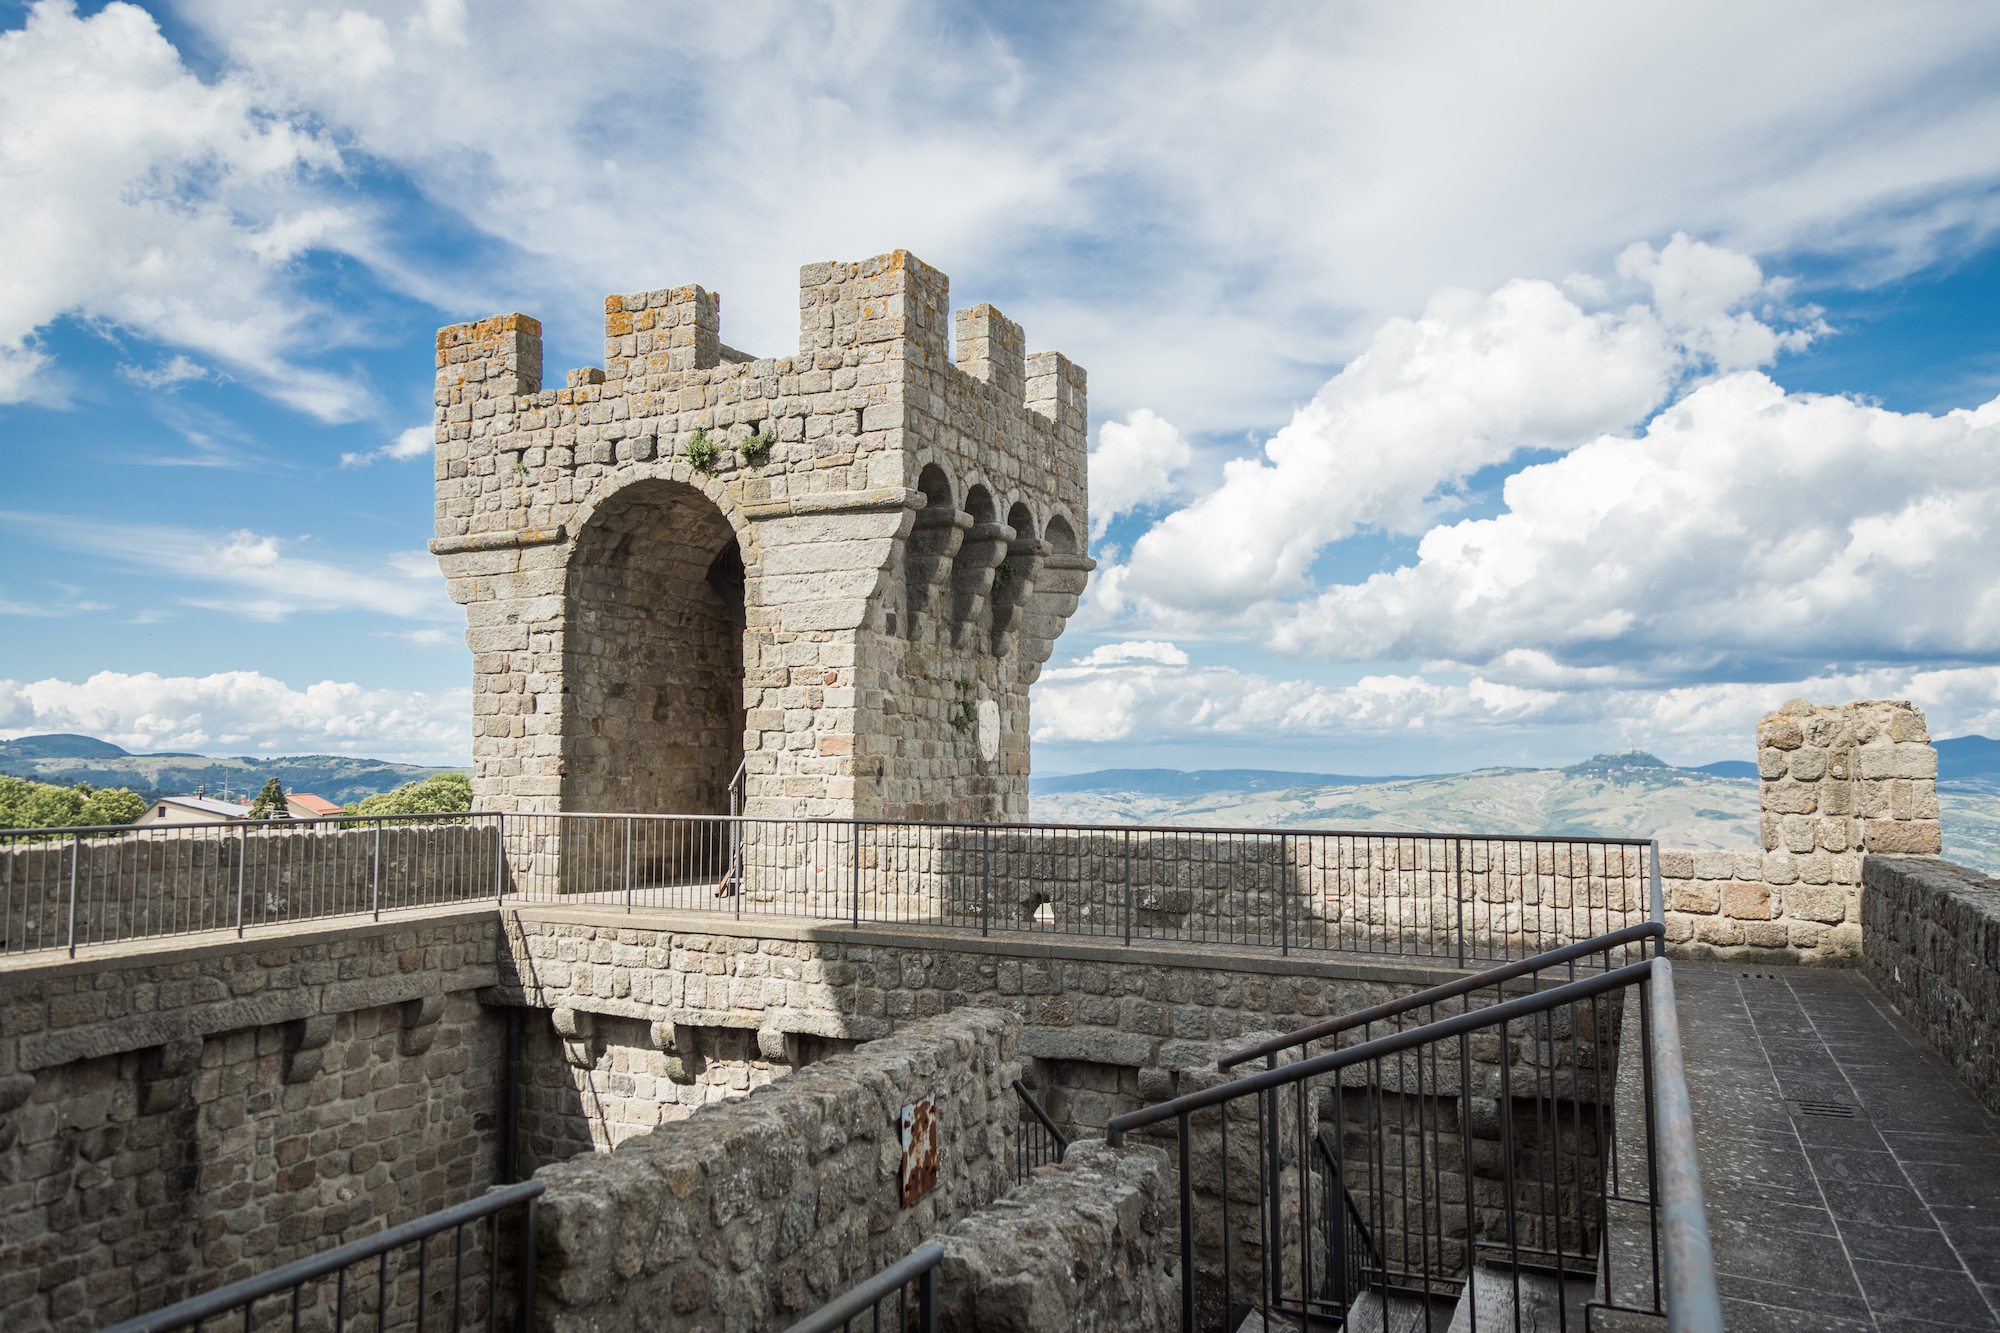 The ancient walls of the Piancastagnaio castle